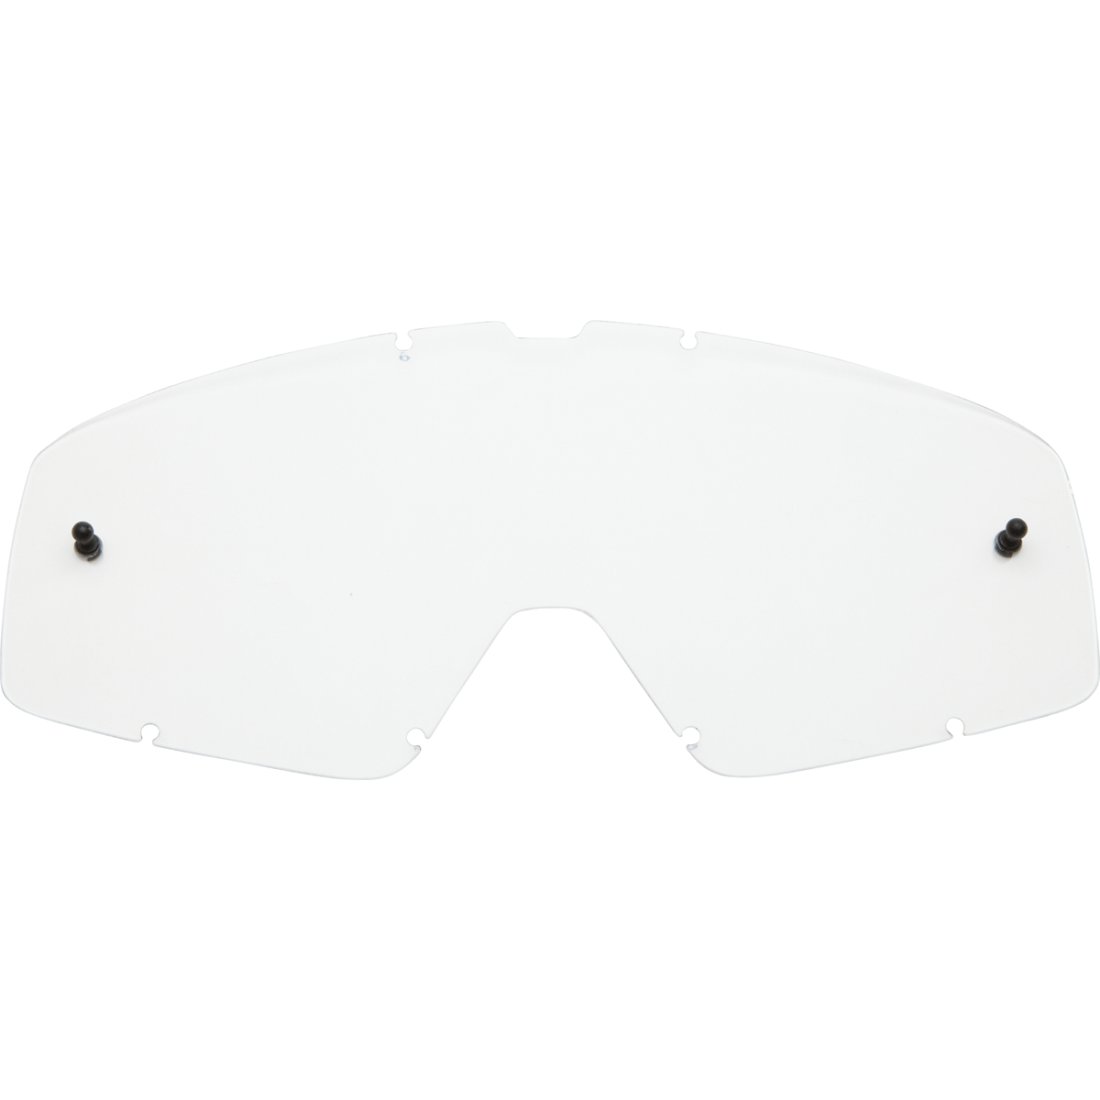 Fox Main Lexan Anti-fog Replacement Lens